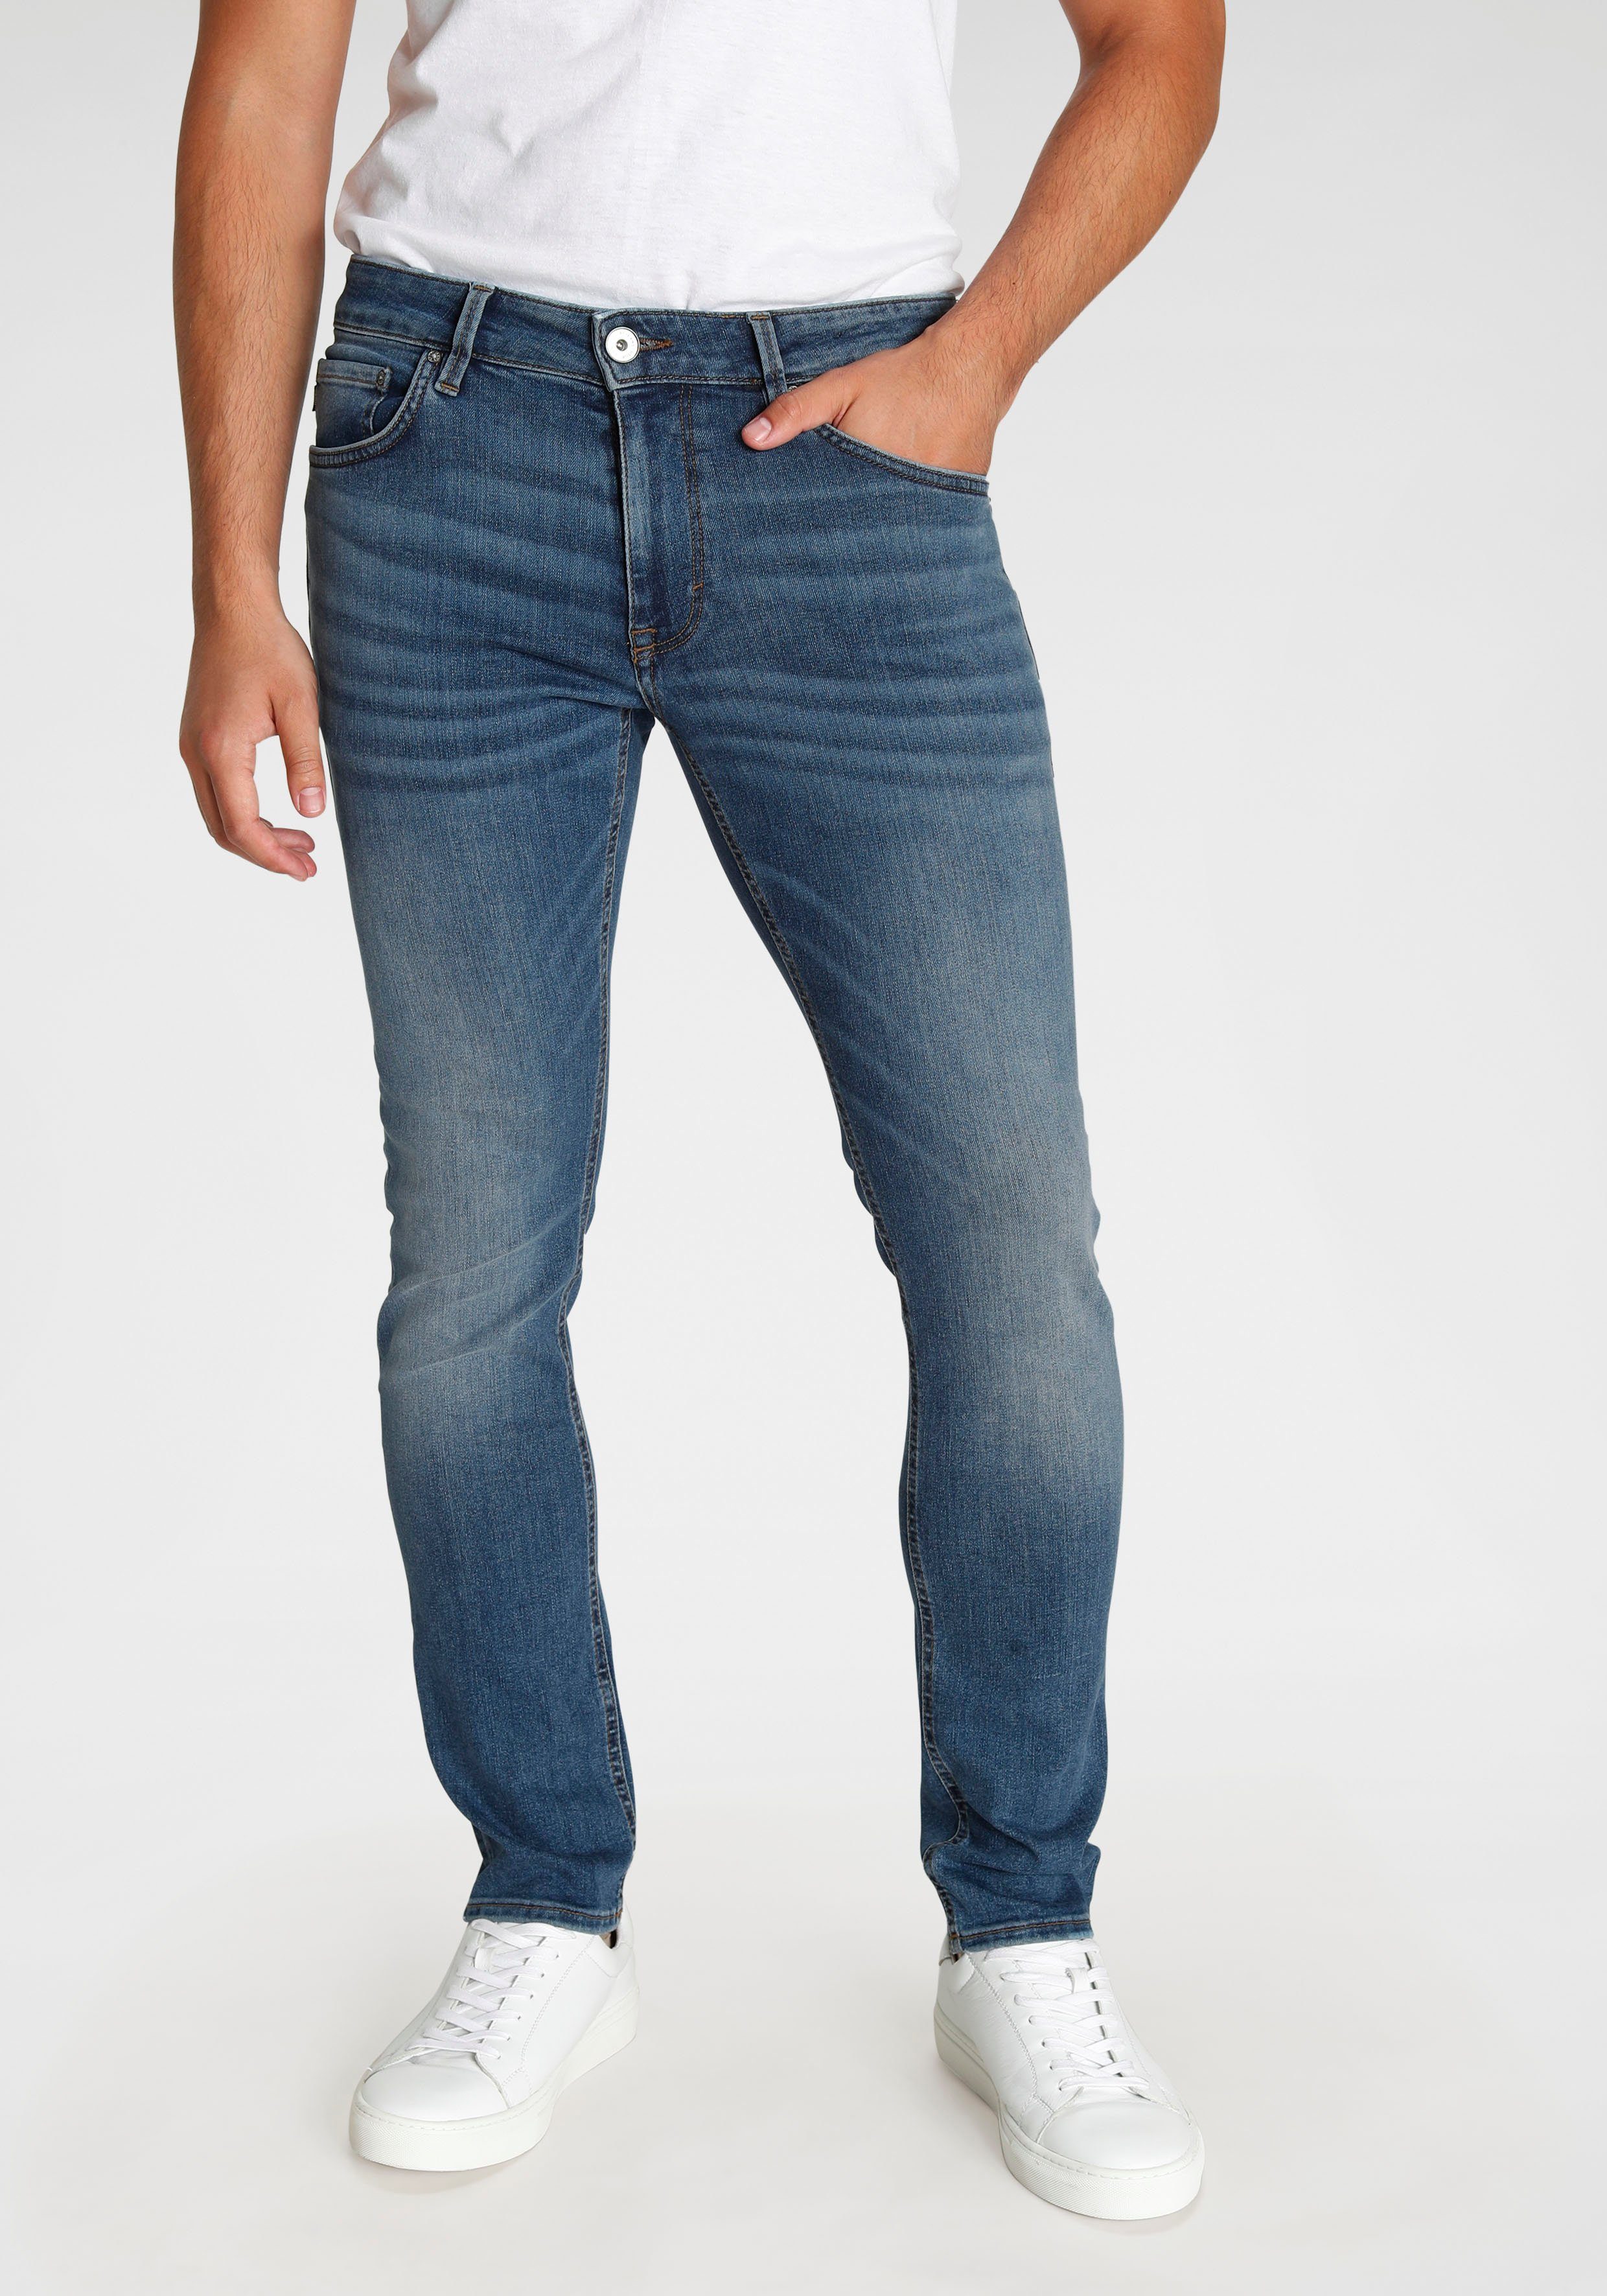 Joop Jeans 5-Pocket-Jeans Stephen Turquoise Aqua